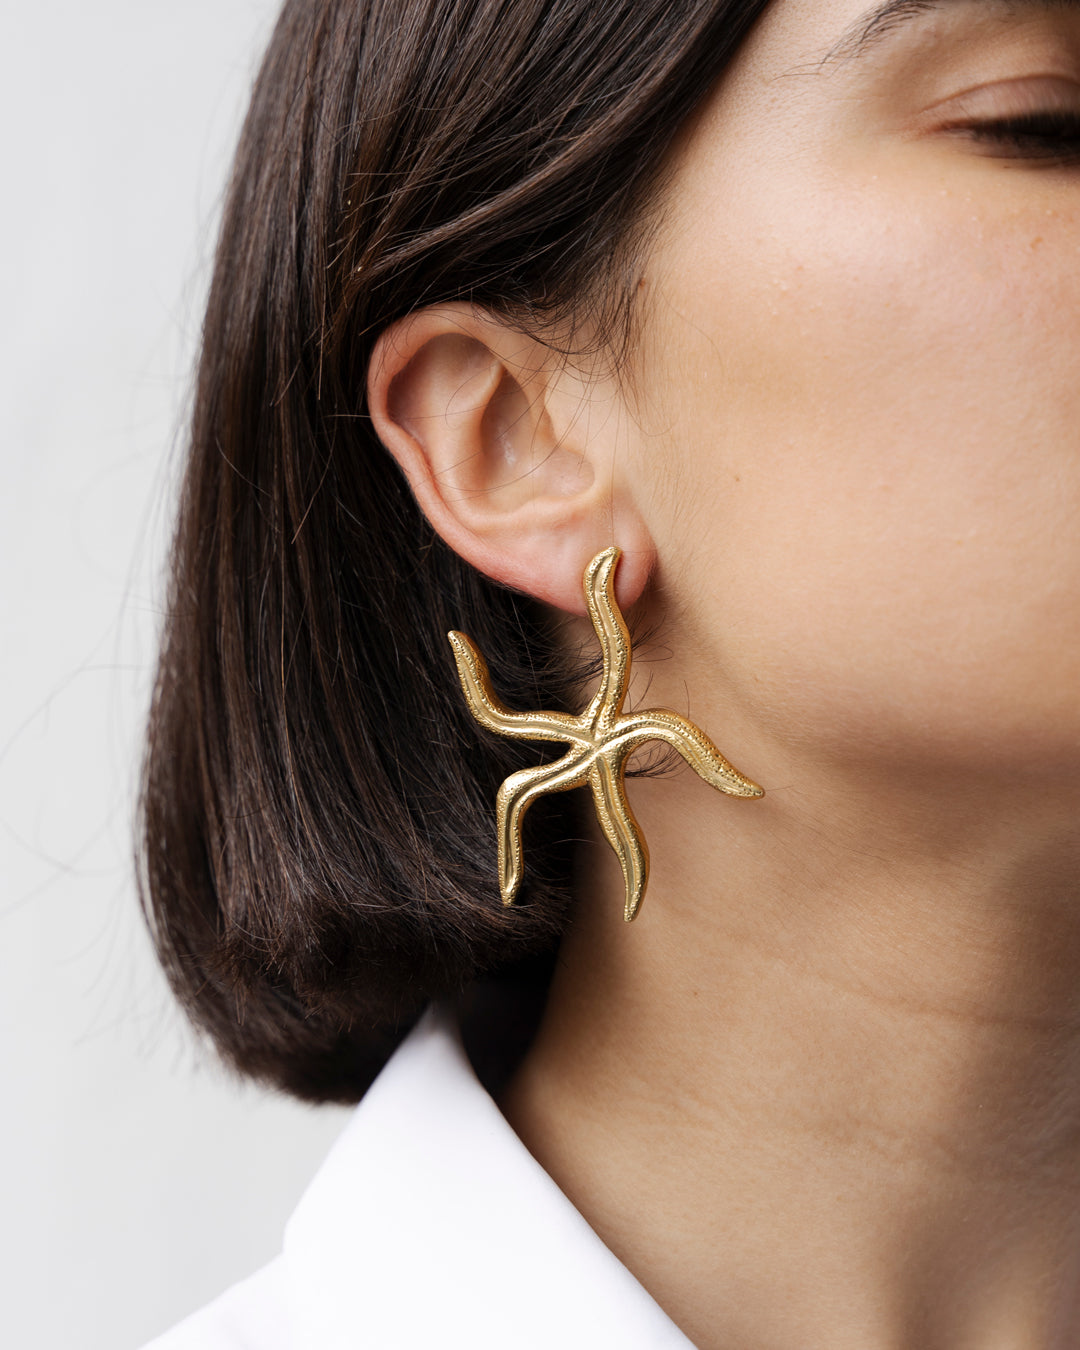 Handmade starfish earrings